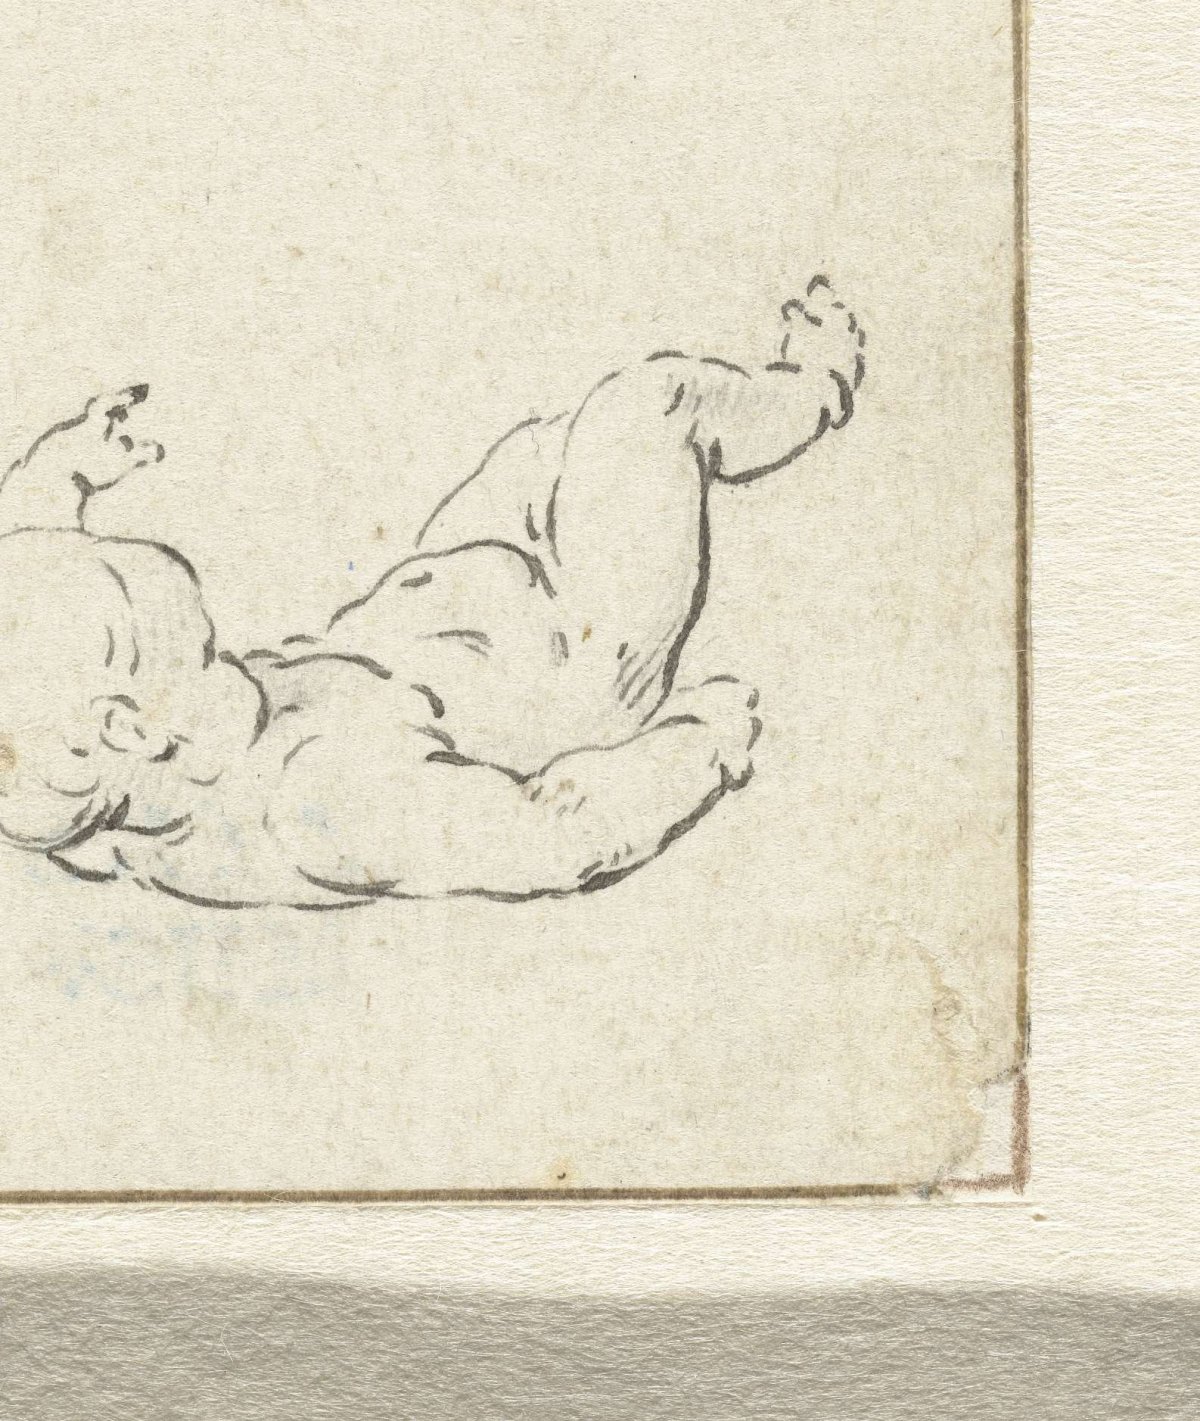 Child lying on back, legs raised, Abraham Delfos, 1741 - 1820